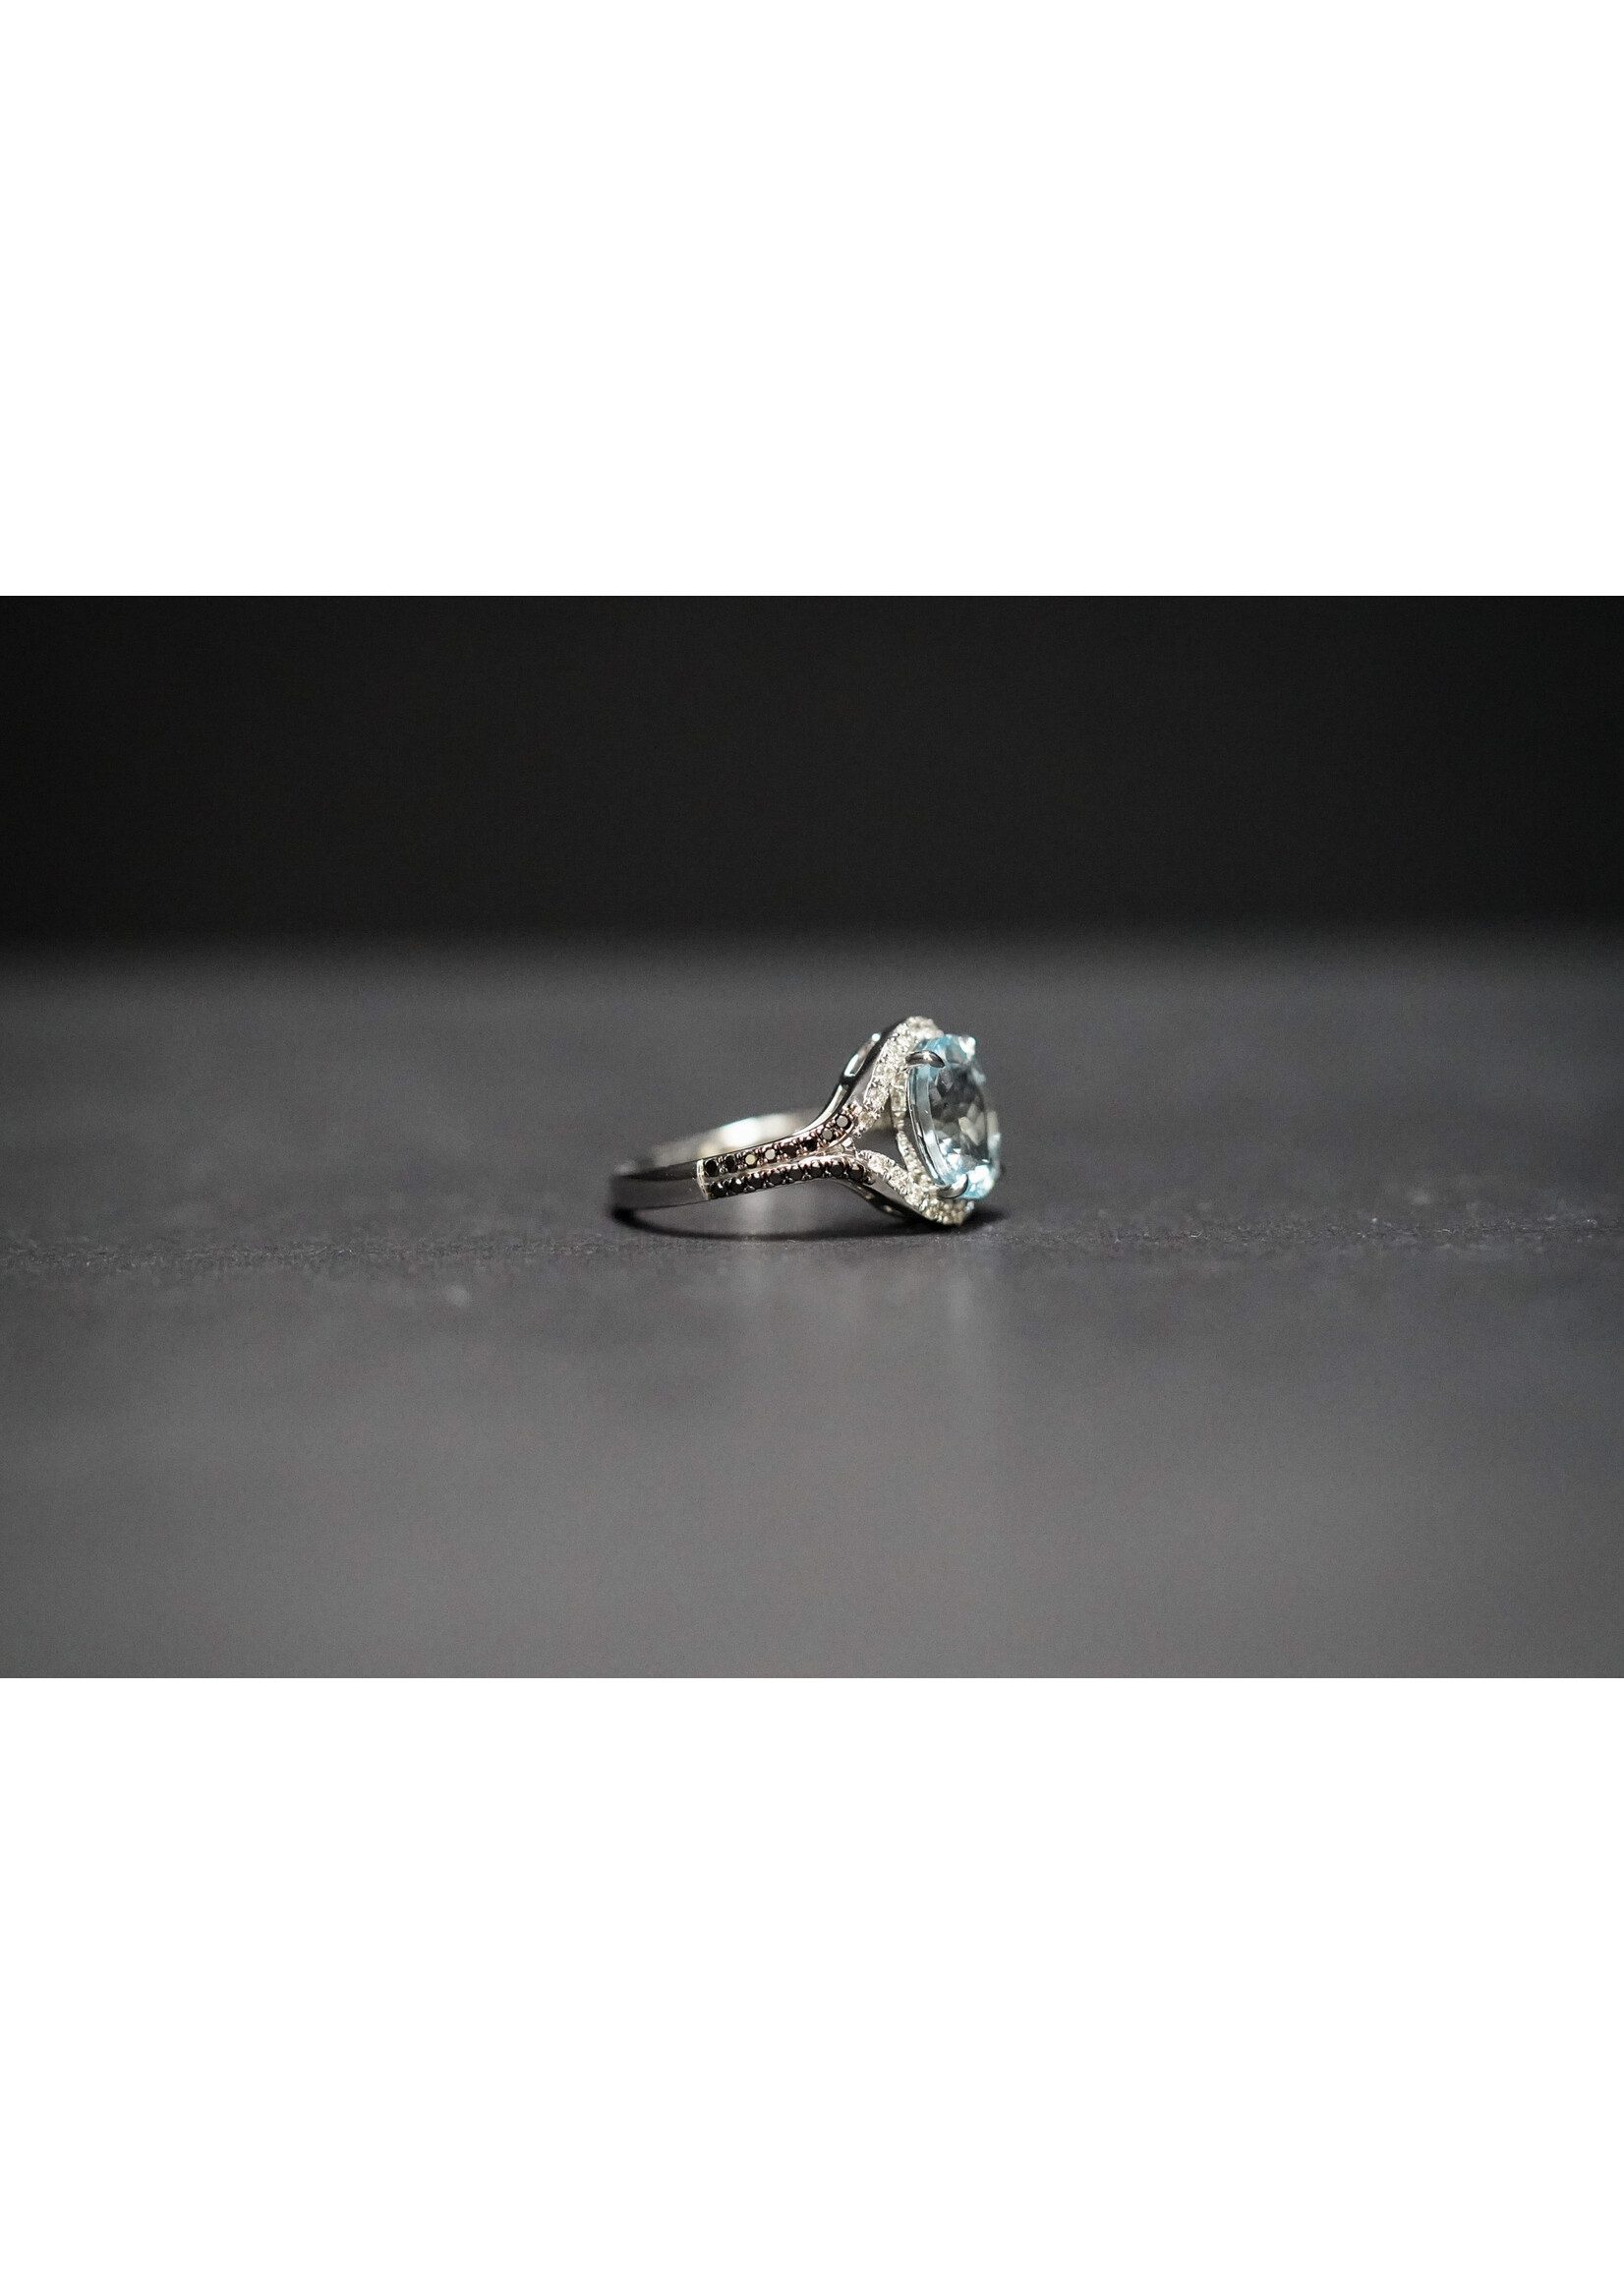 14KW 3.97g 2.79ctw (2.39ctr) Aquamarine & Diamond Fashion Ring (size 7)